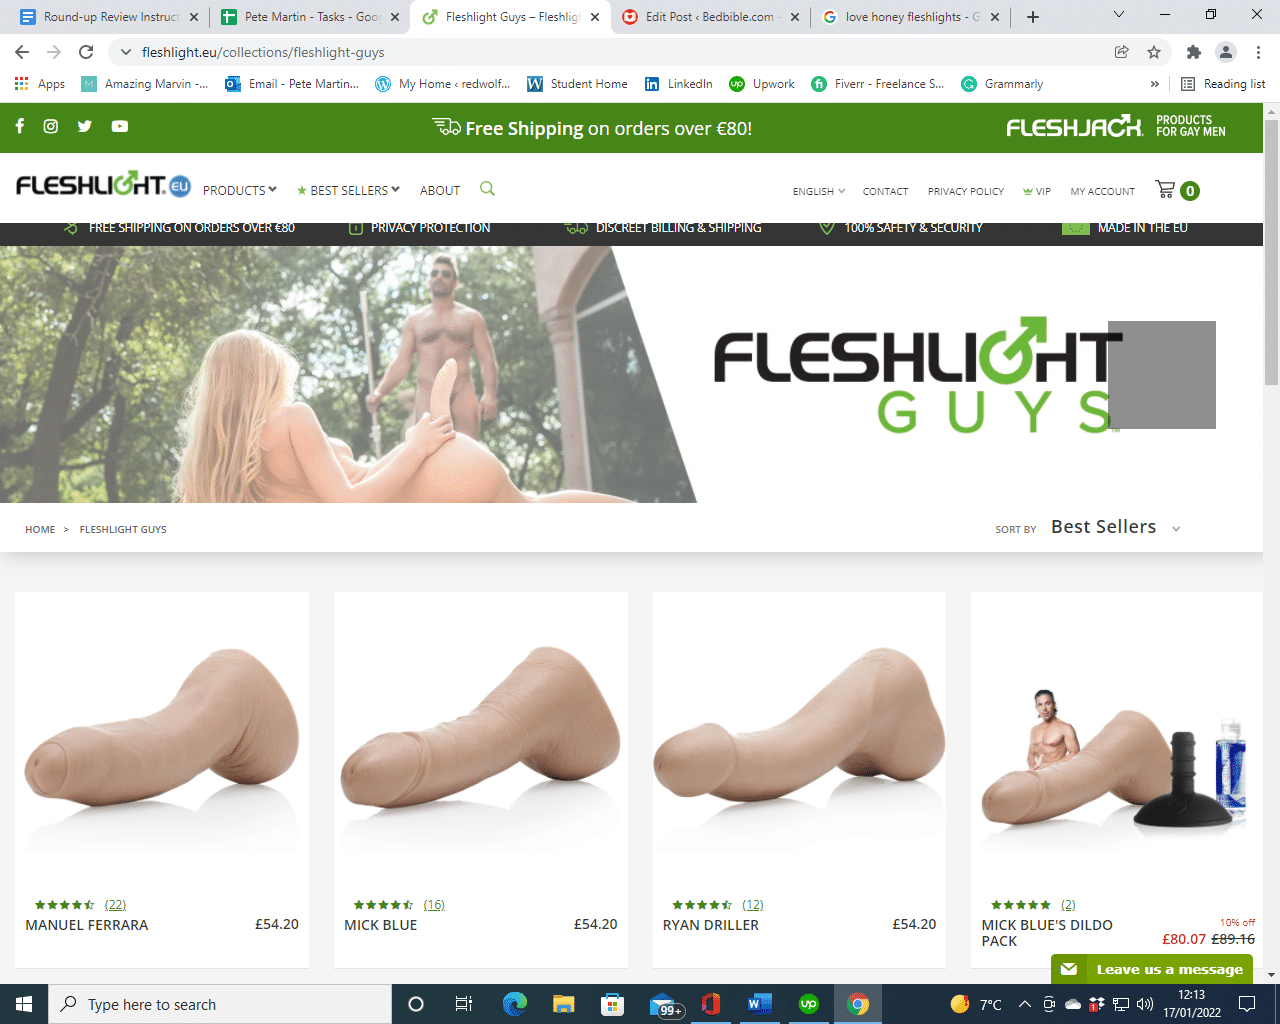 Fleshlight 